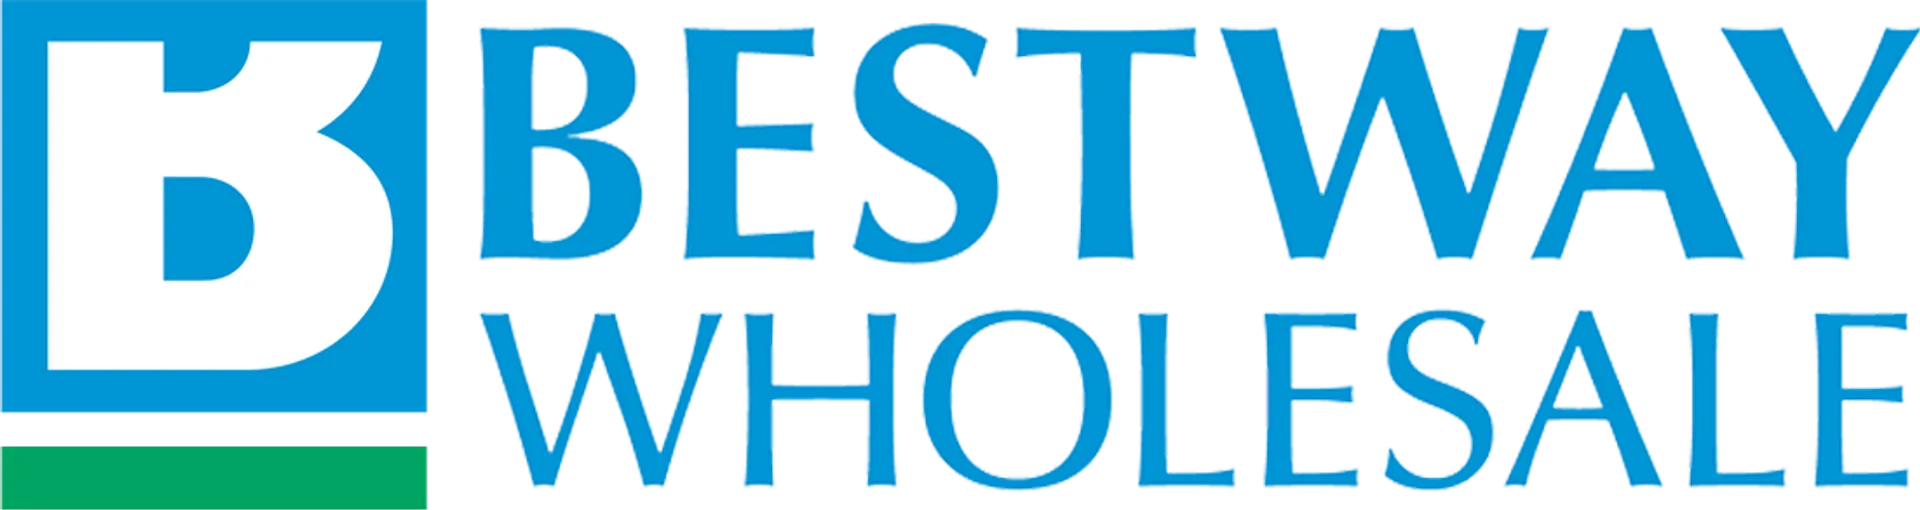 BESTWAY logo